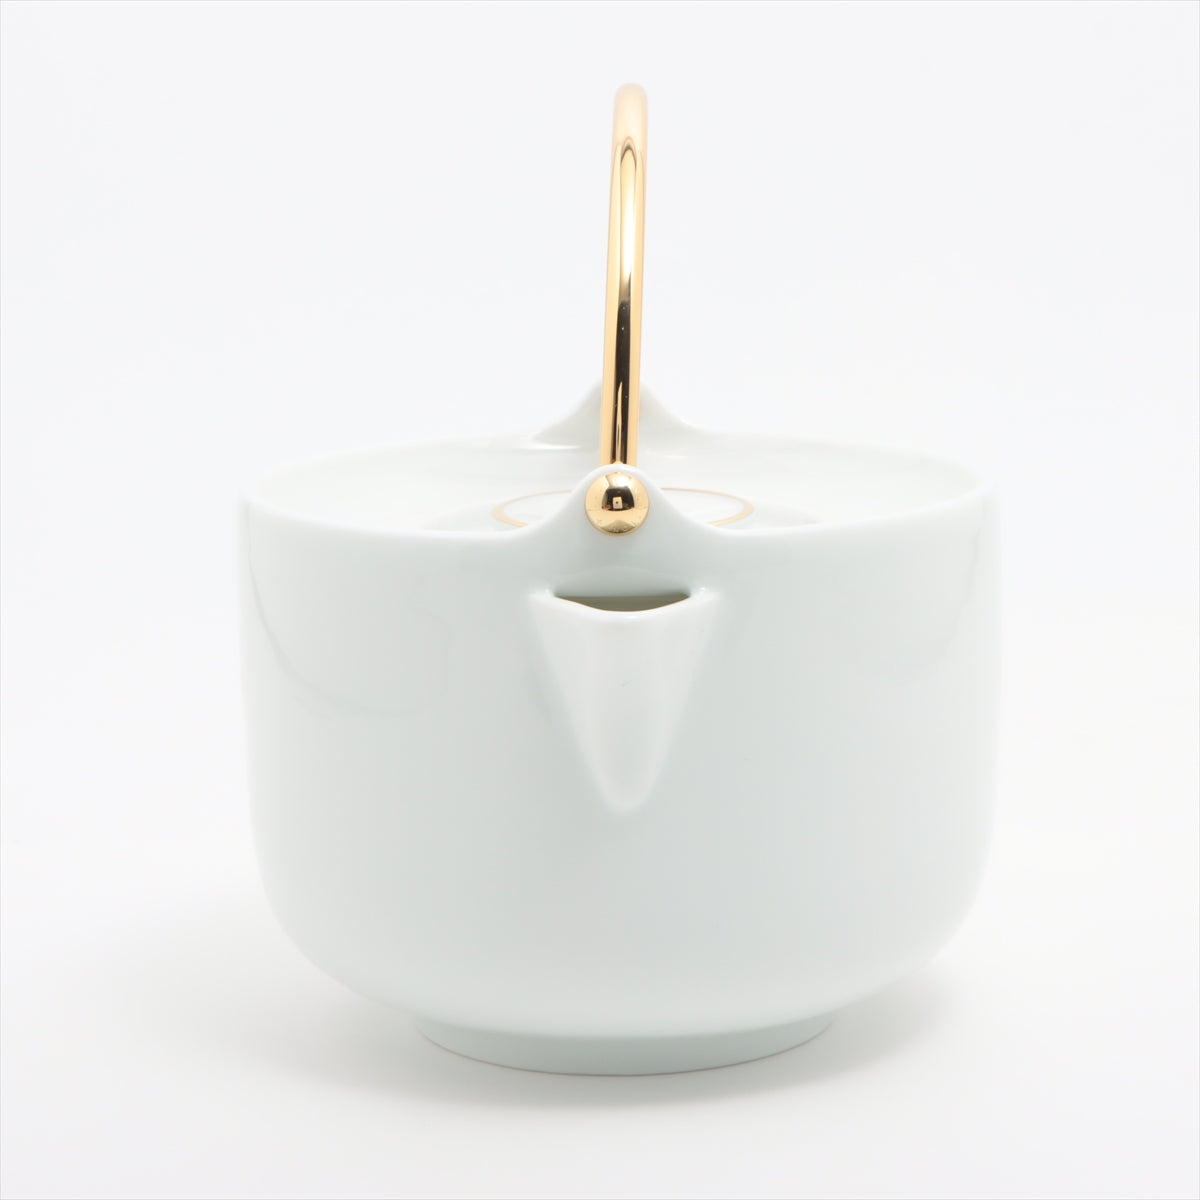 Louis Vuitton GI0816 teapot Porcelain teapot Ceramic